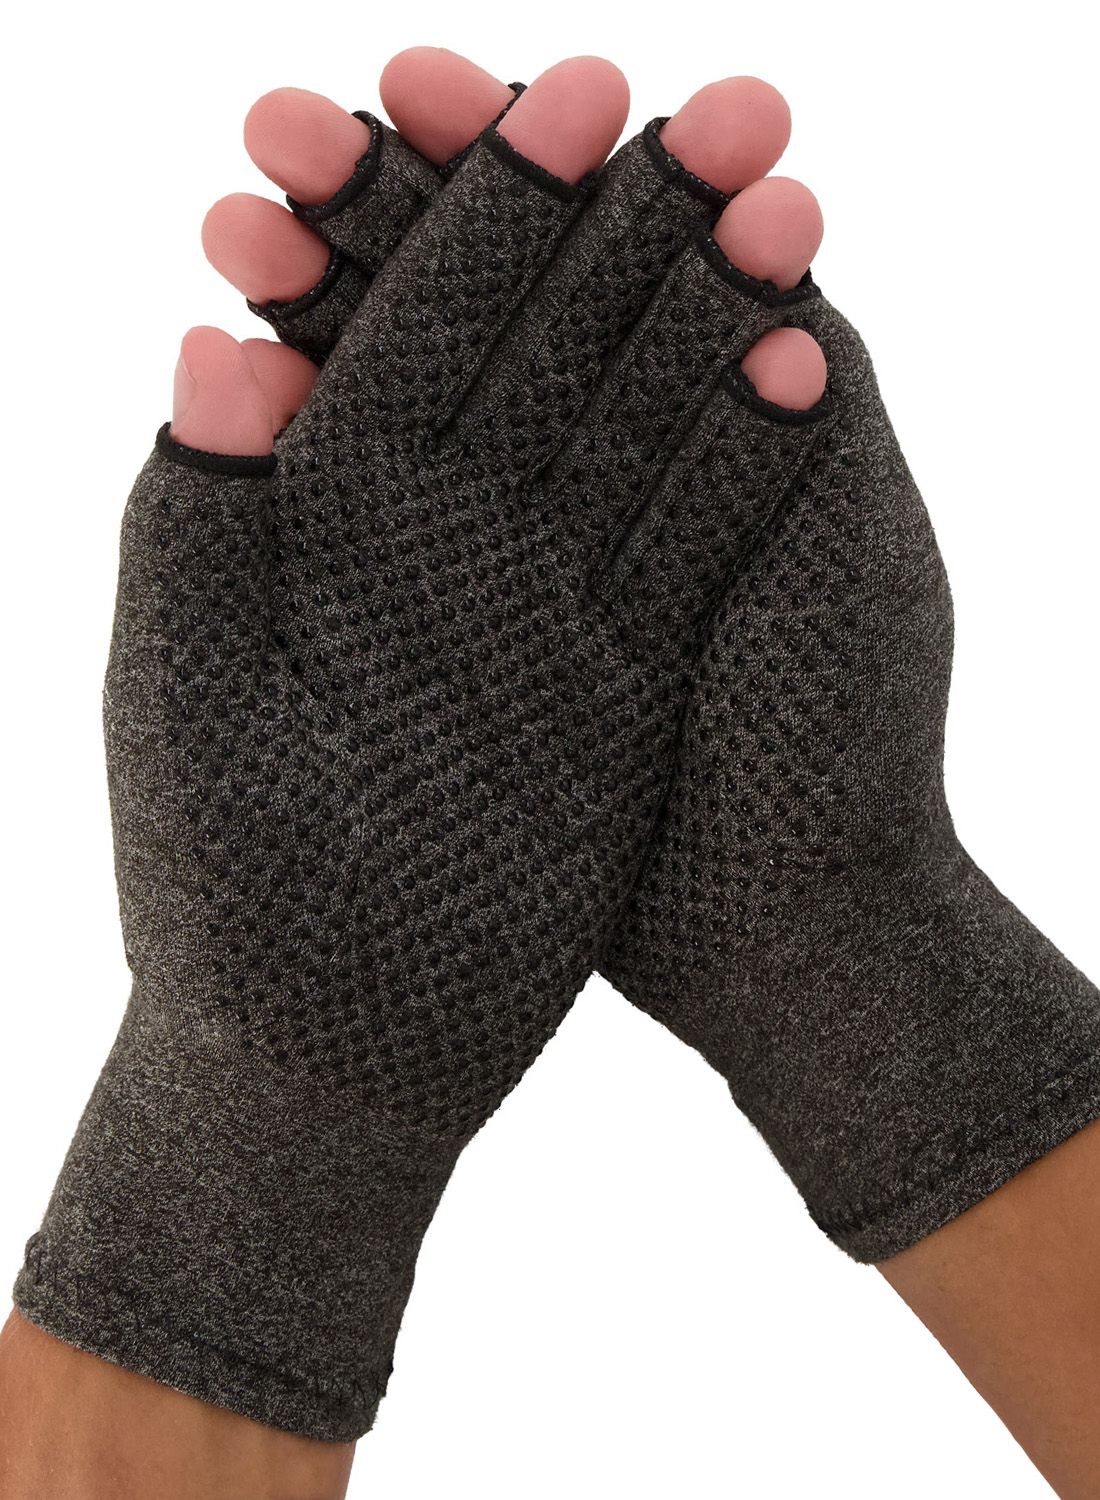 dunimed rheumatoid arthritis osteoarthritis gloves with anti-slip layer for sale